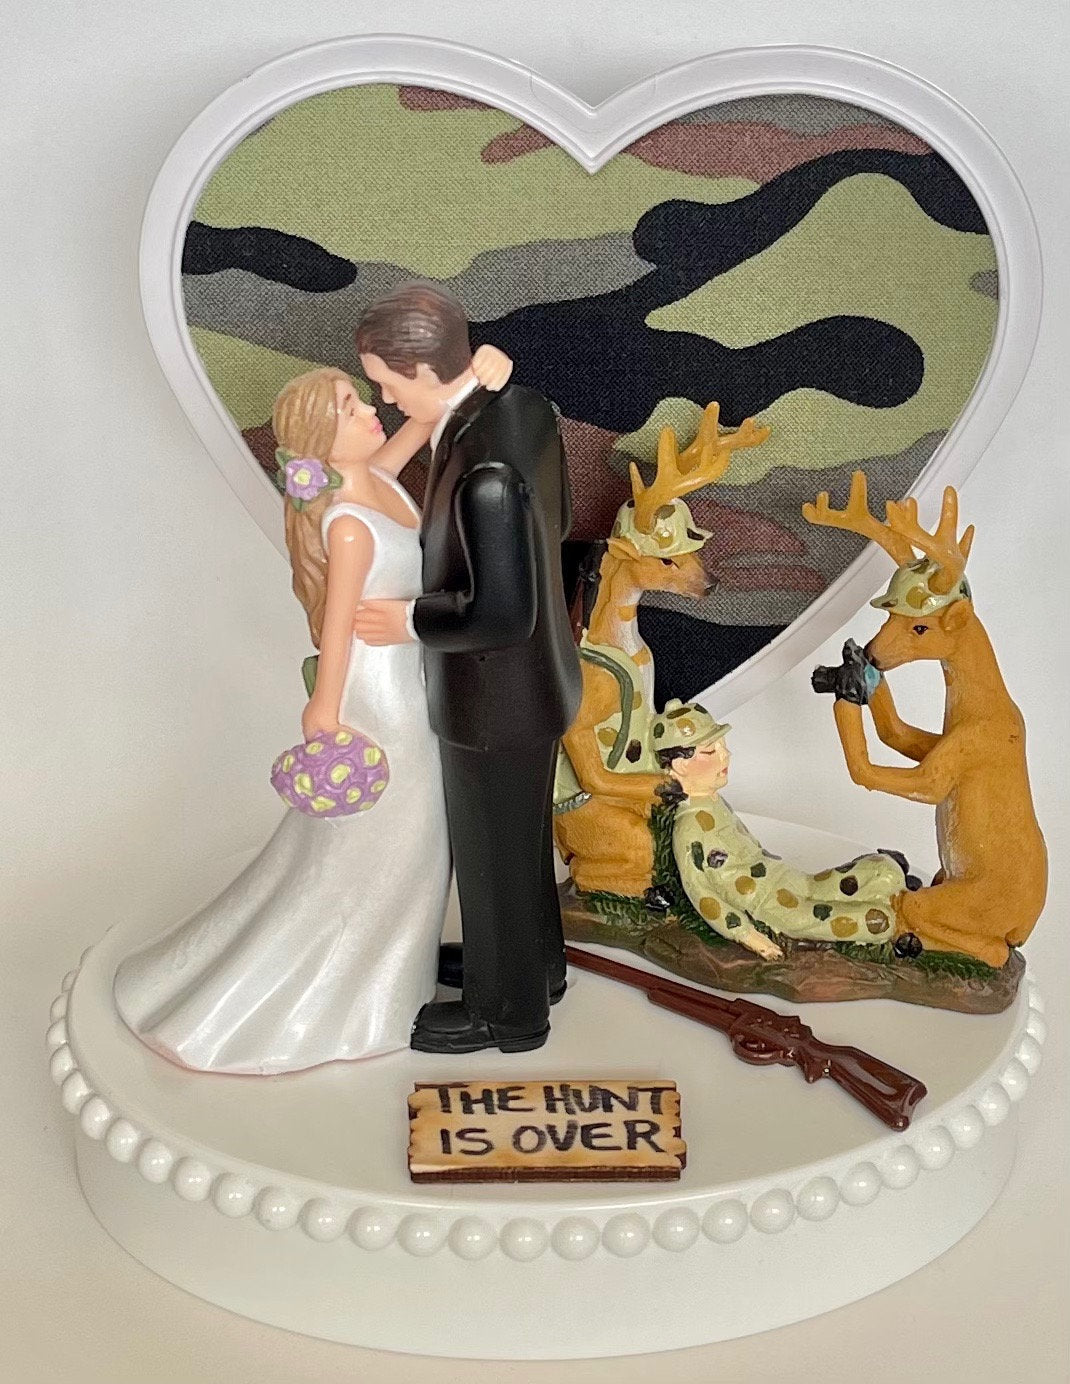 Jamie Lynn Spears: Wedding Cake and Groom's Cake Details